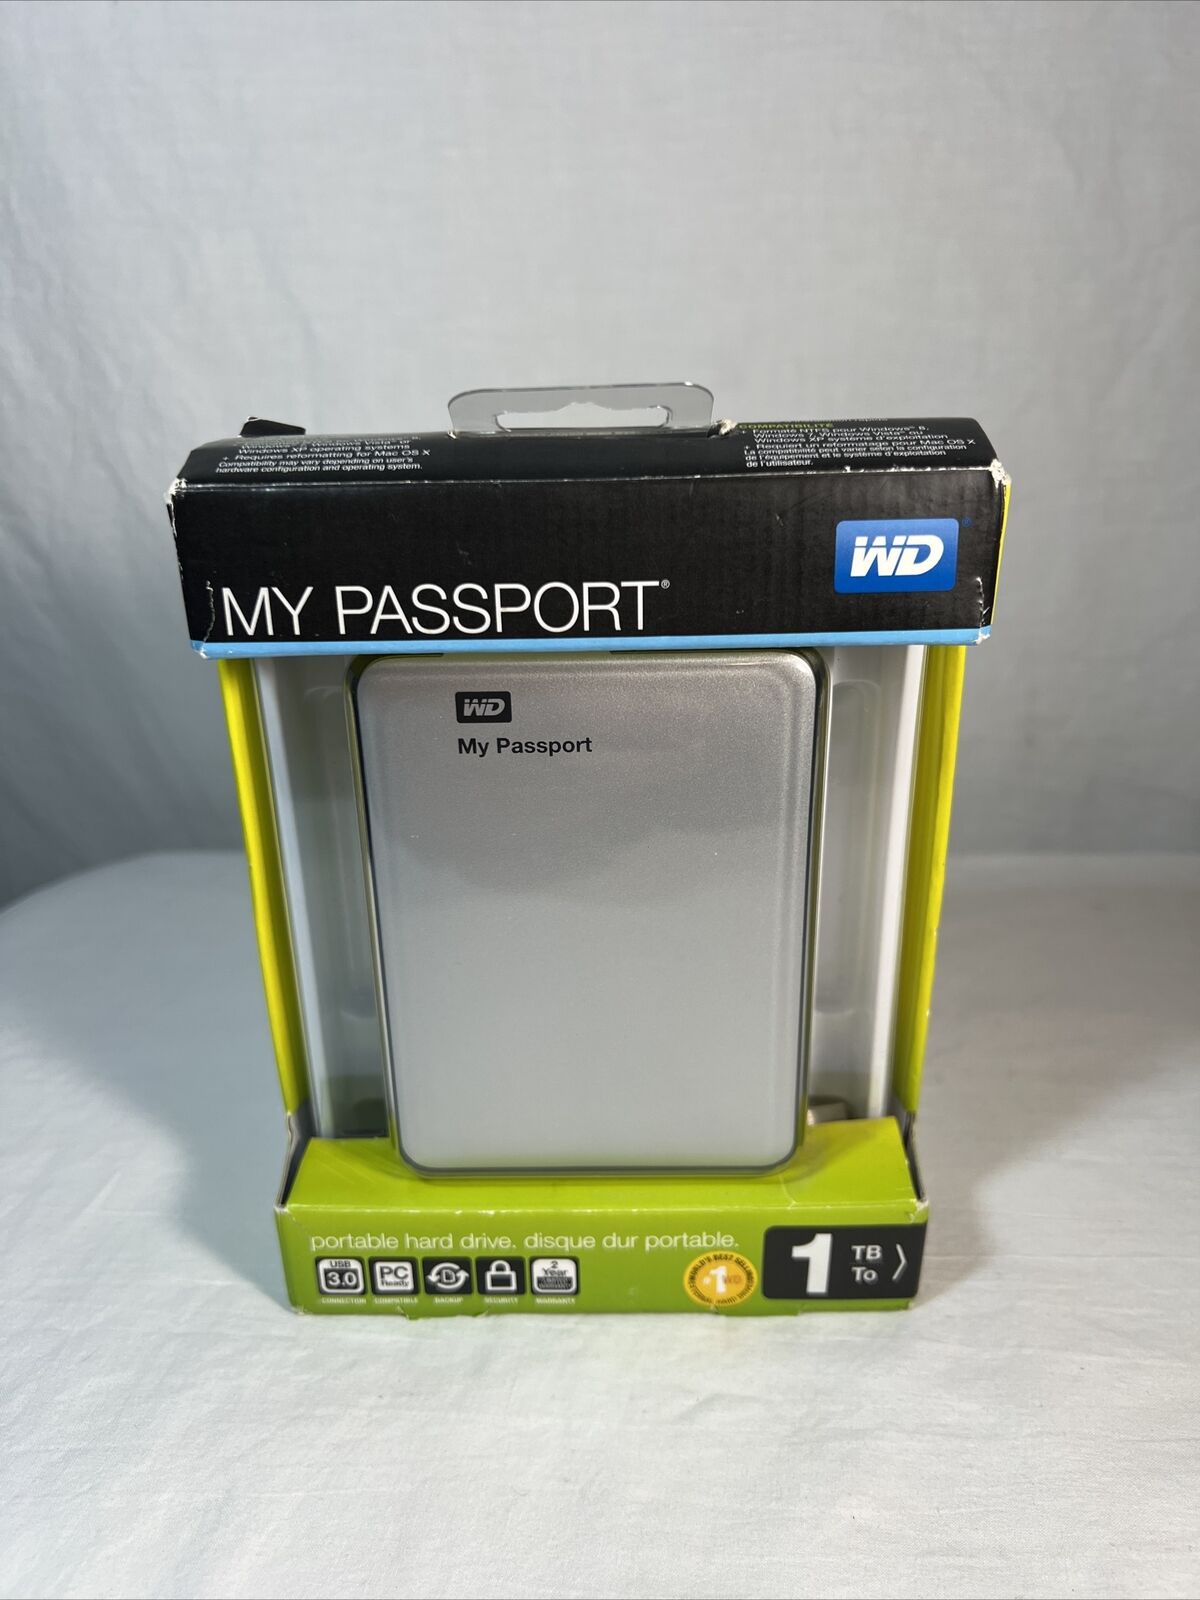 (NEW) WD My Passport 1TB External Portable Hard Drive USB 3.0 WDBBEP0010BSL-NESN